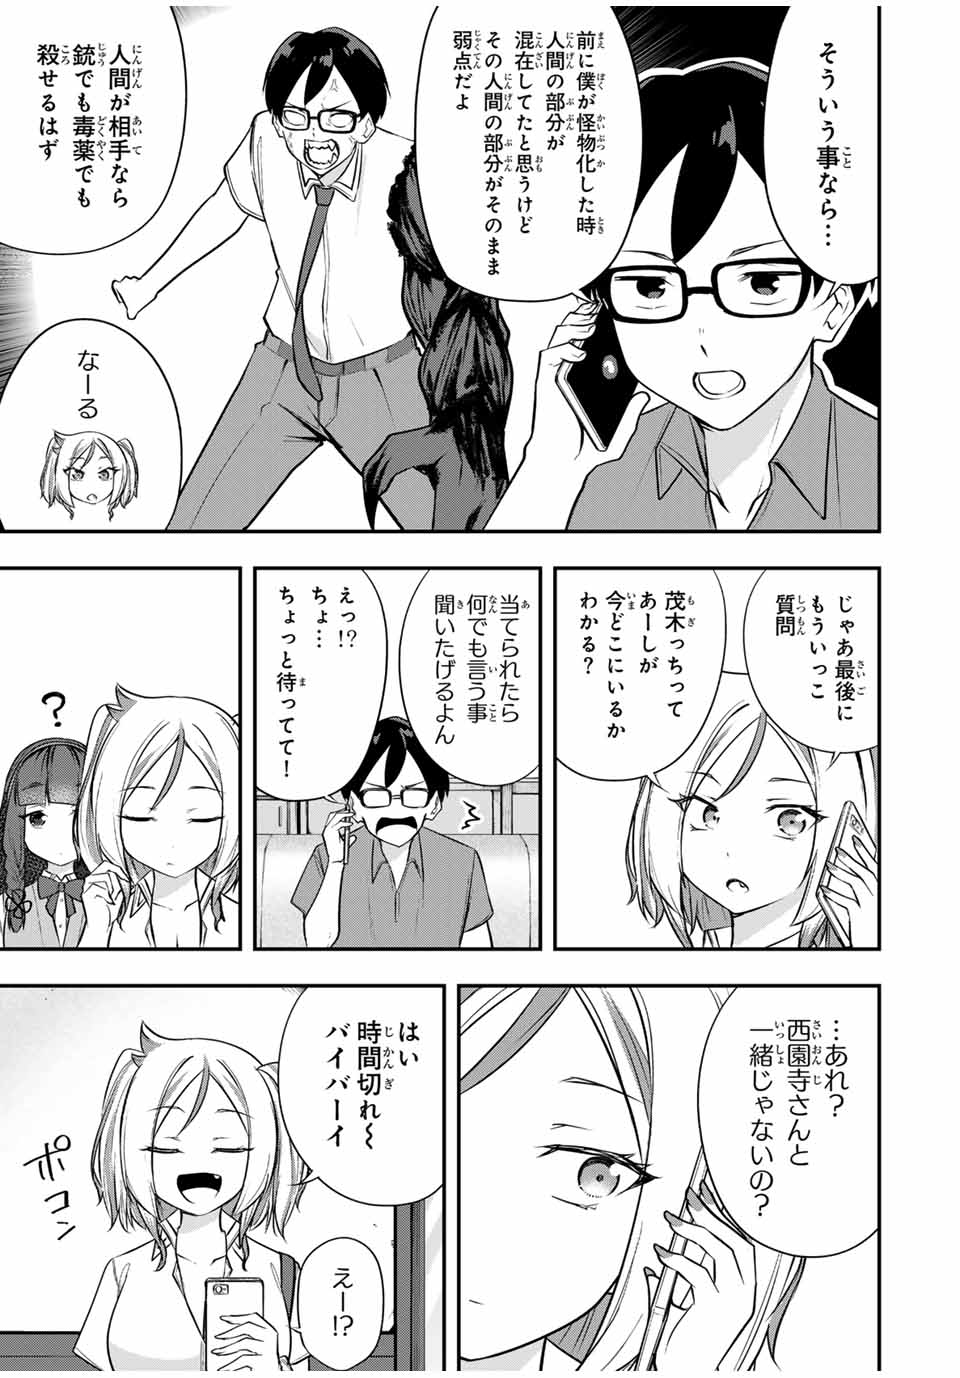 Heroine wa xx Okasegitai - Chapter 13 - Page 15